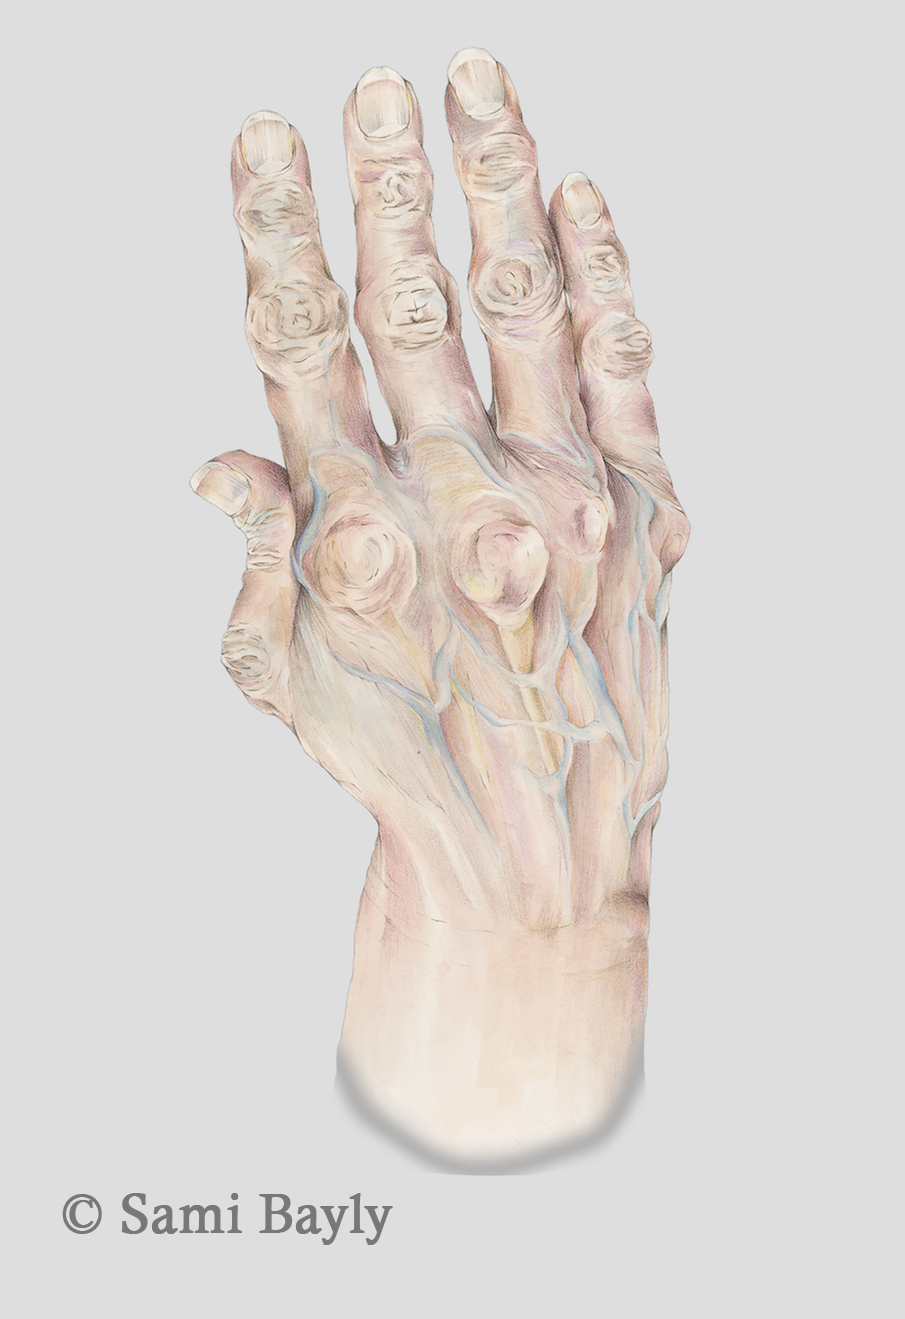 Arthritic Hand